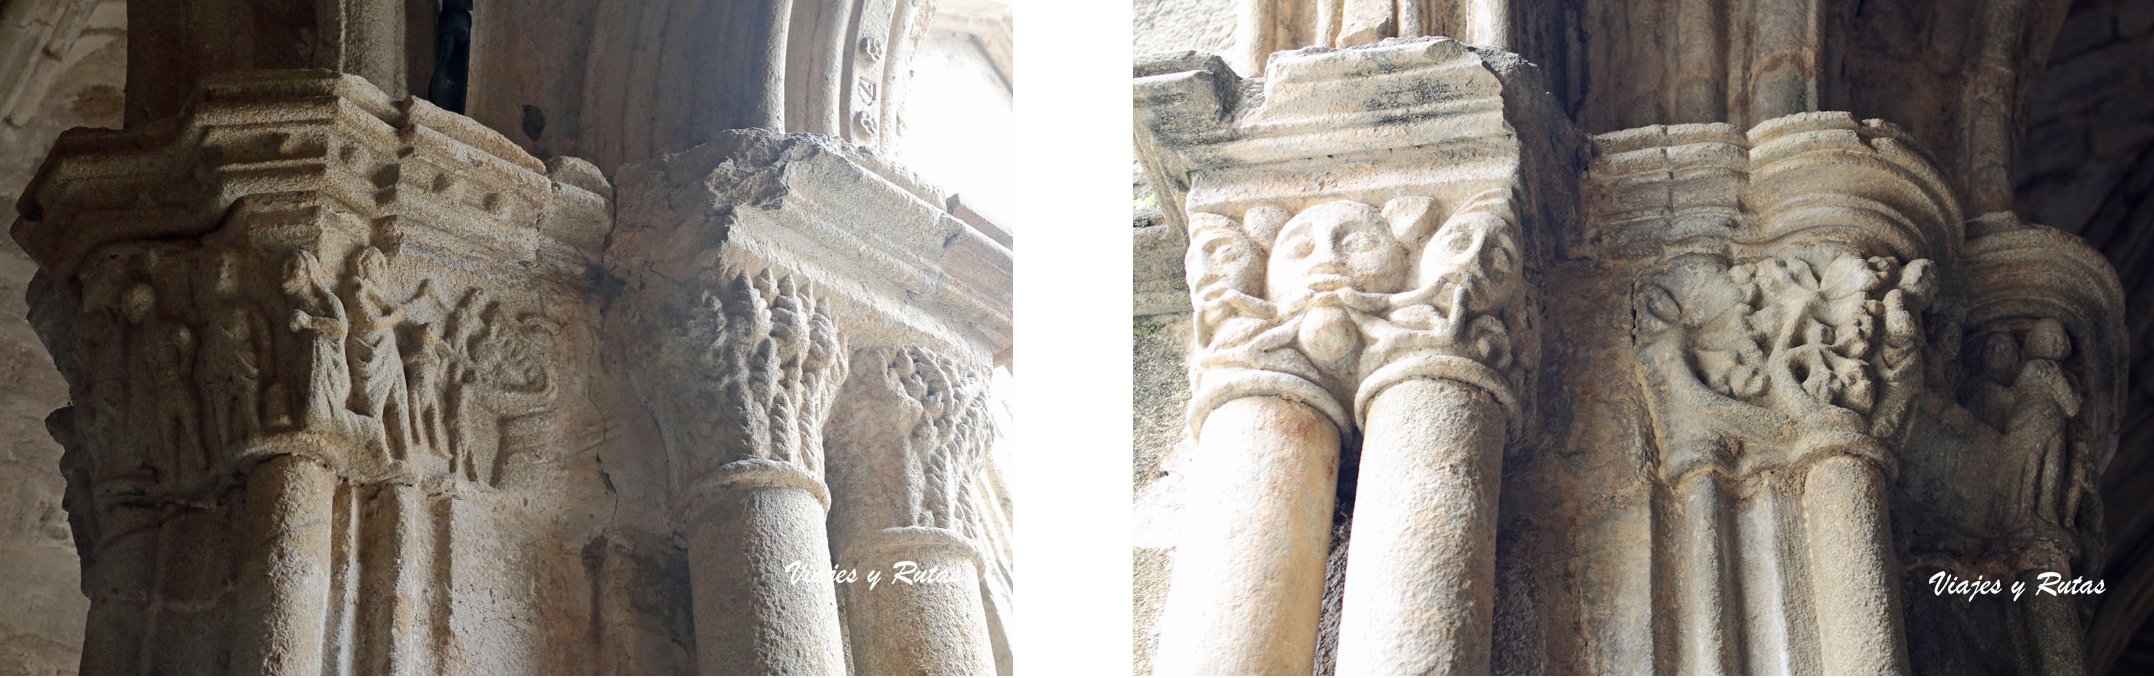 Capiteles del claustro de la Catedral de Plasencia